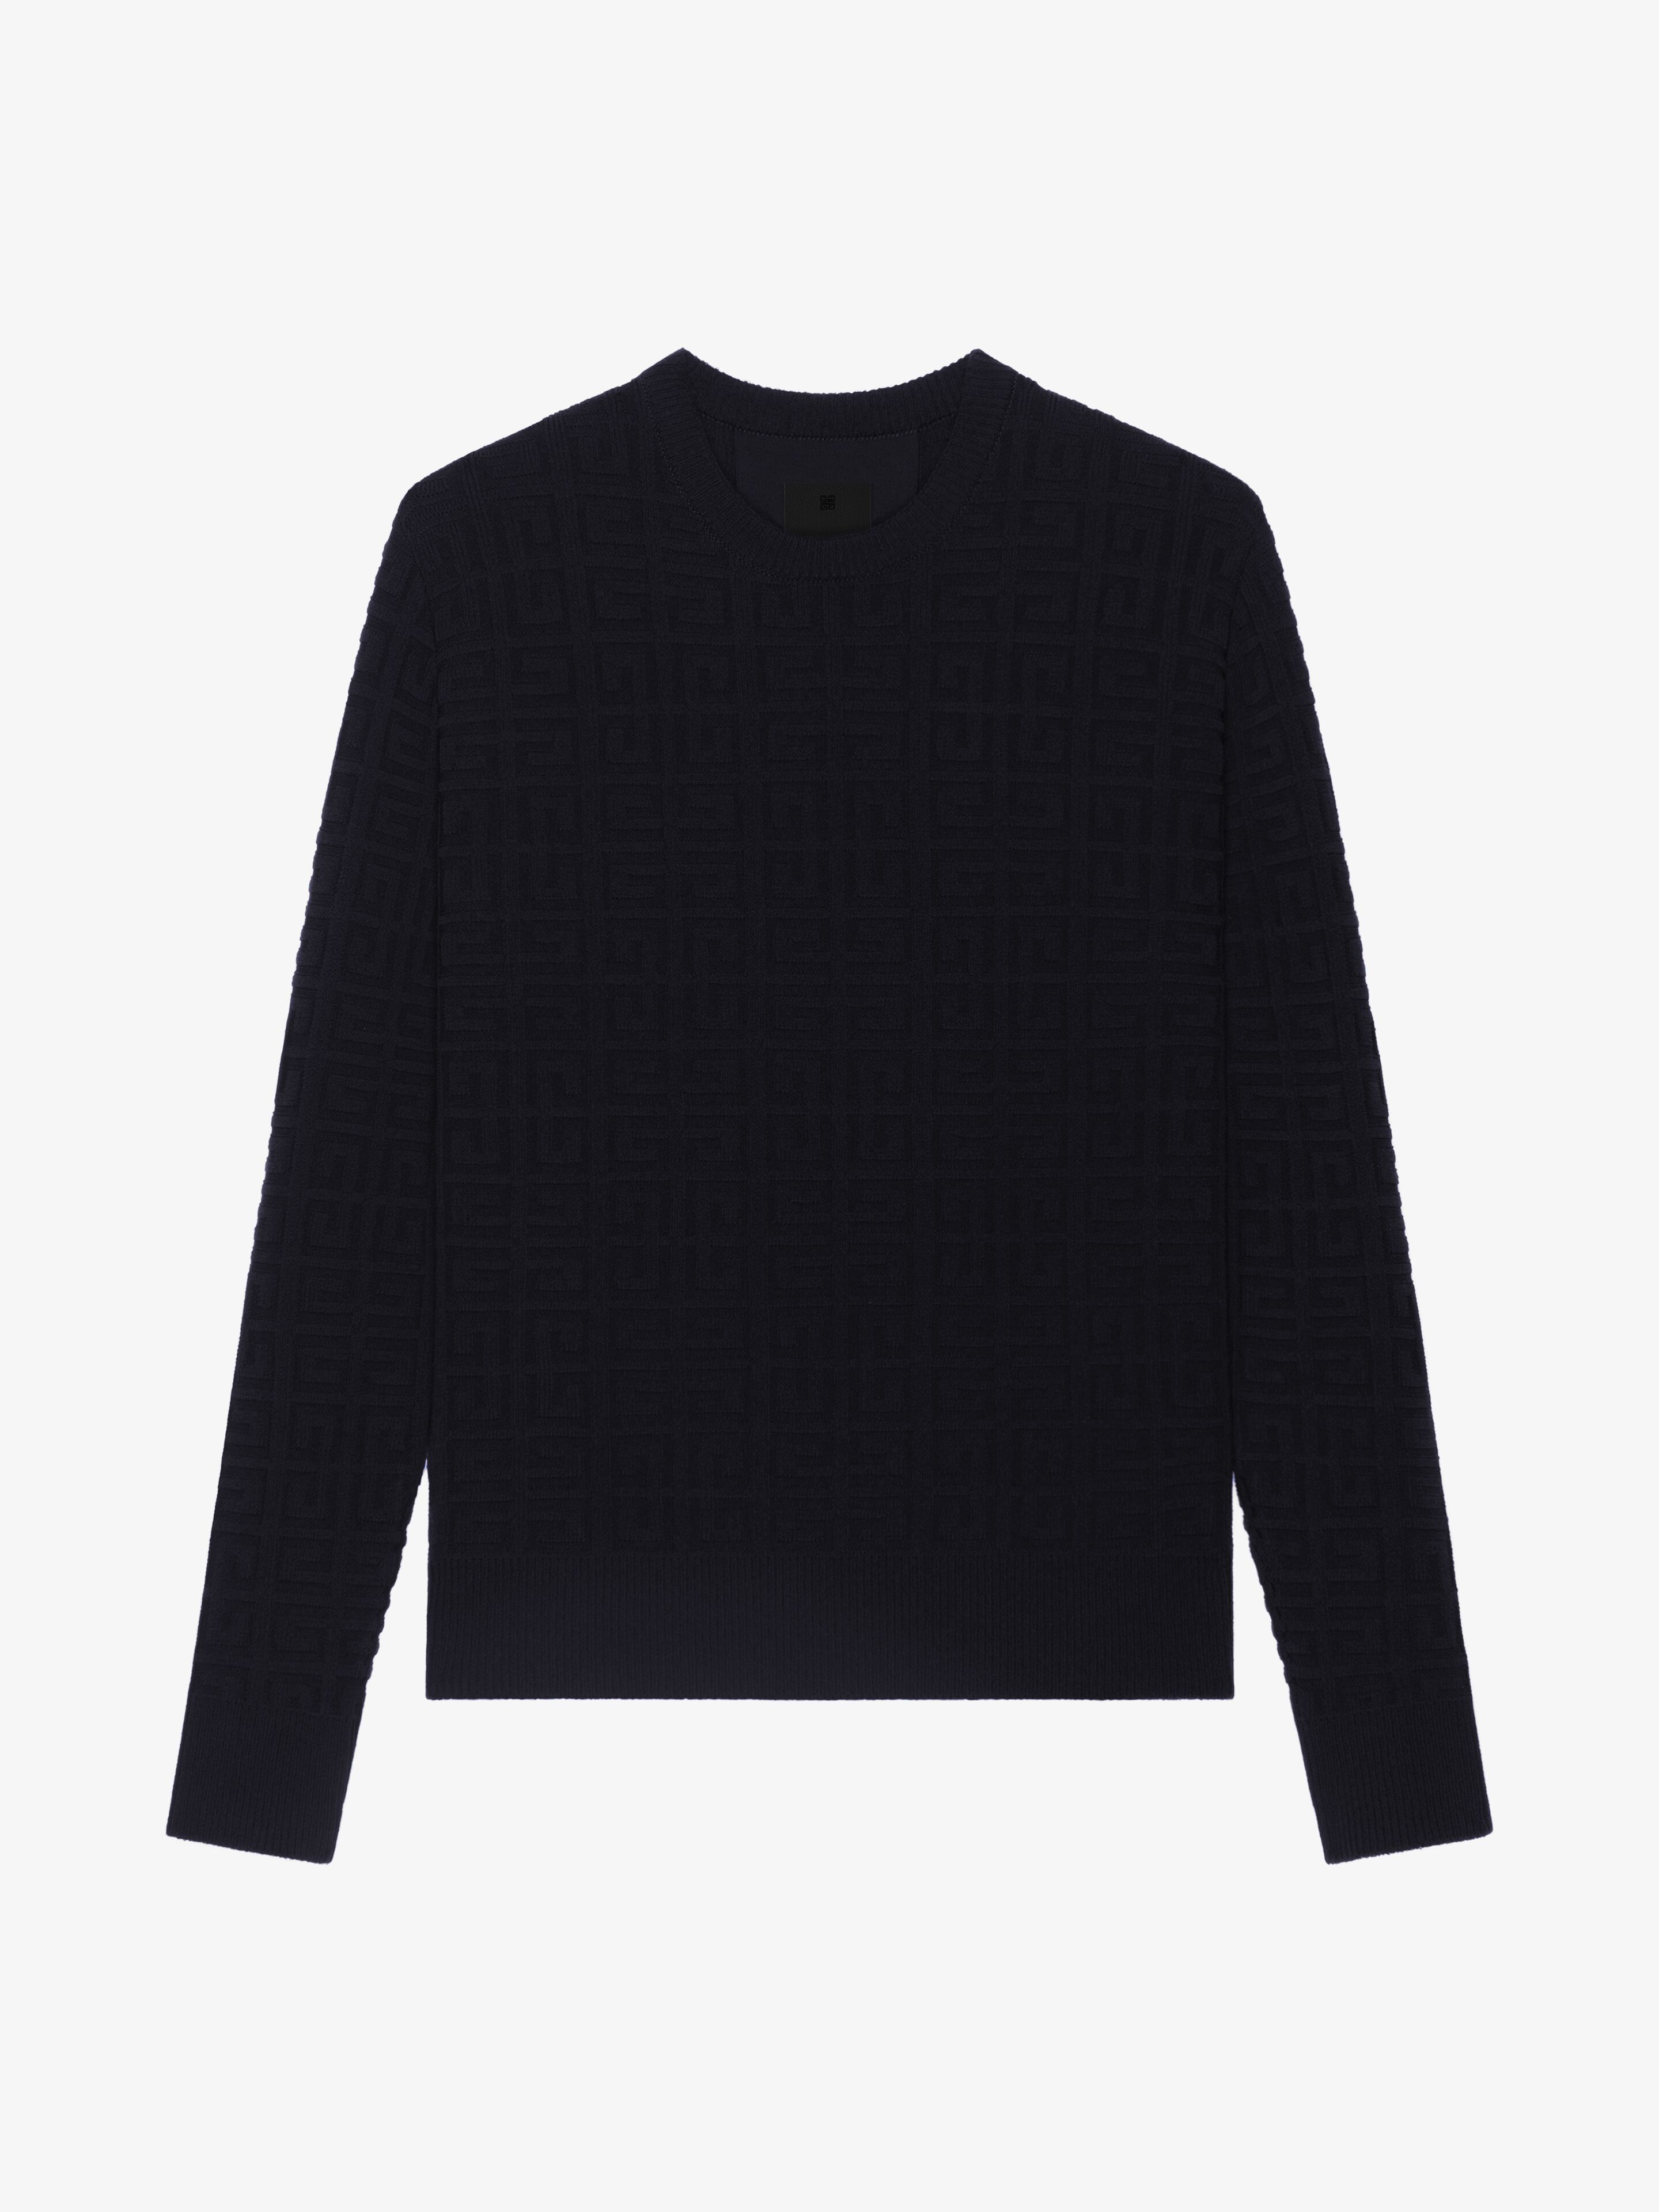 Givenchy Star Neckline Knitted Jumper Black